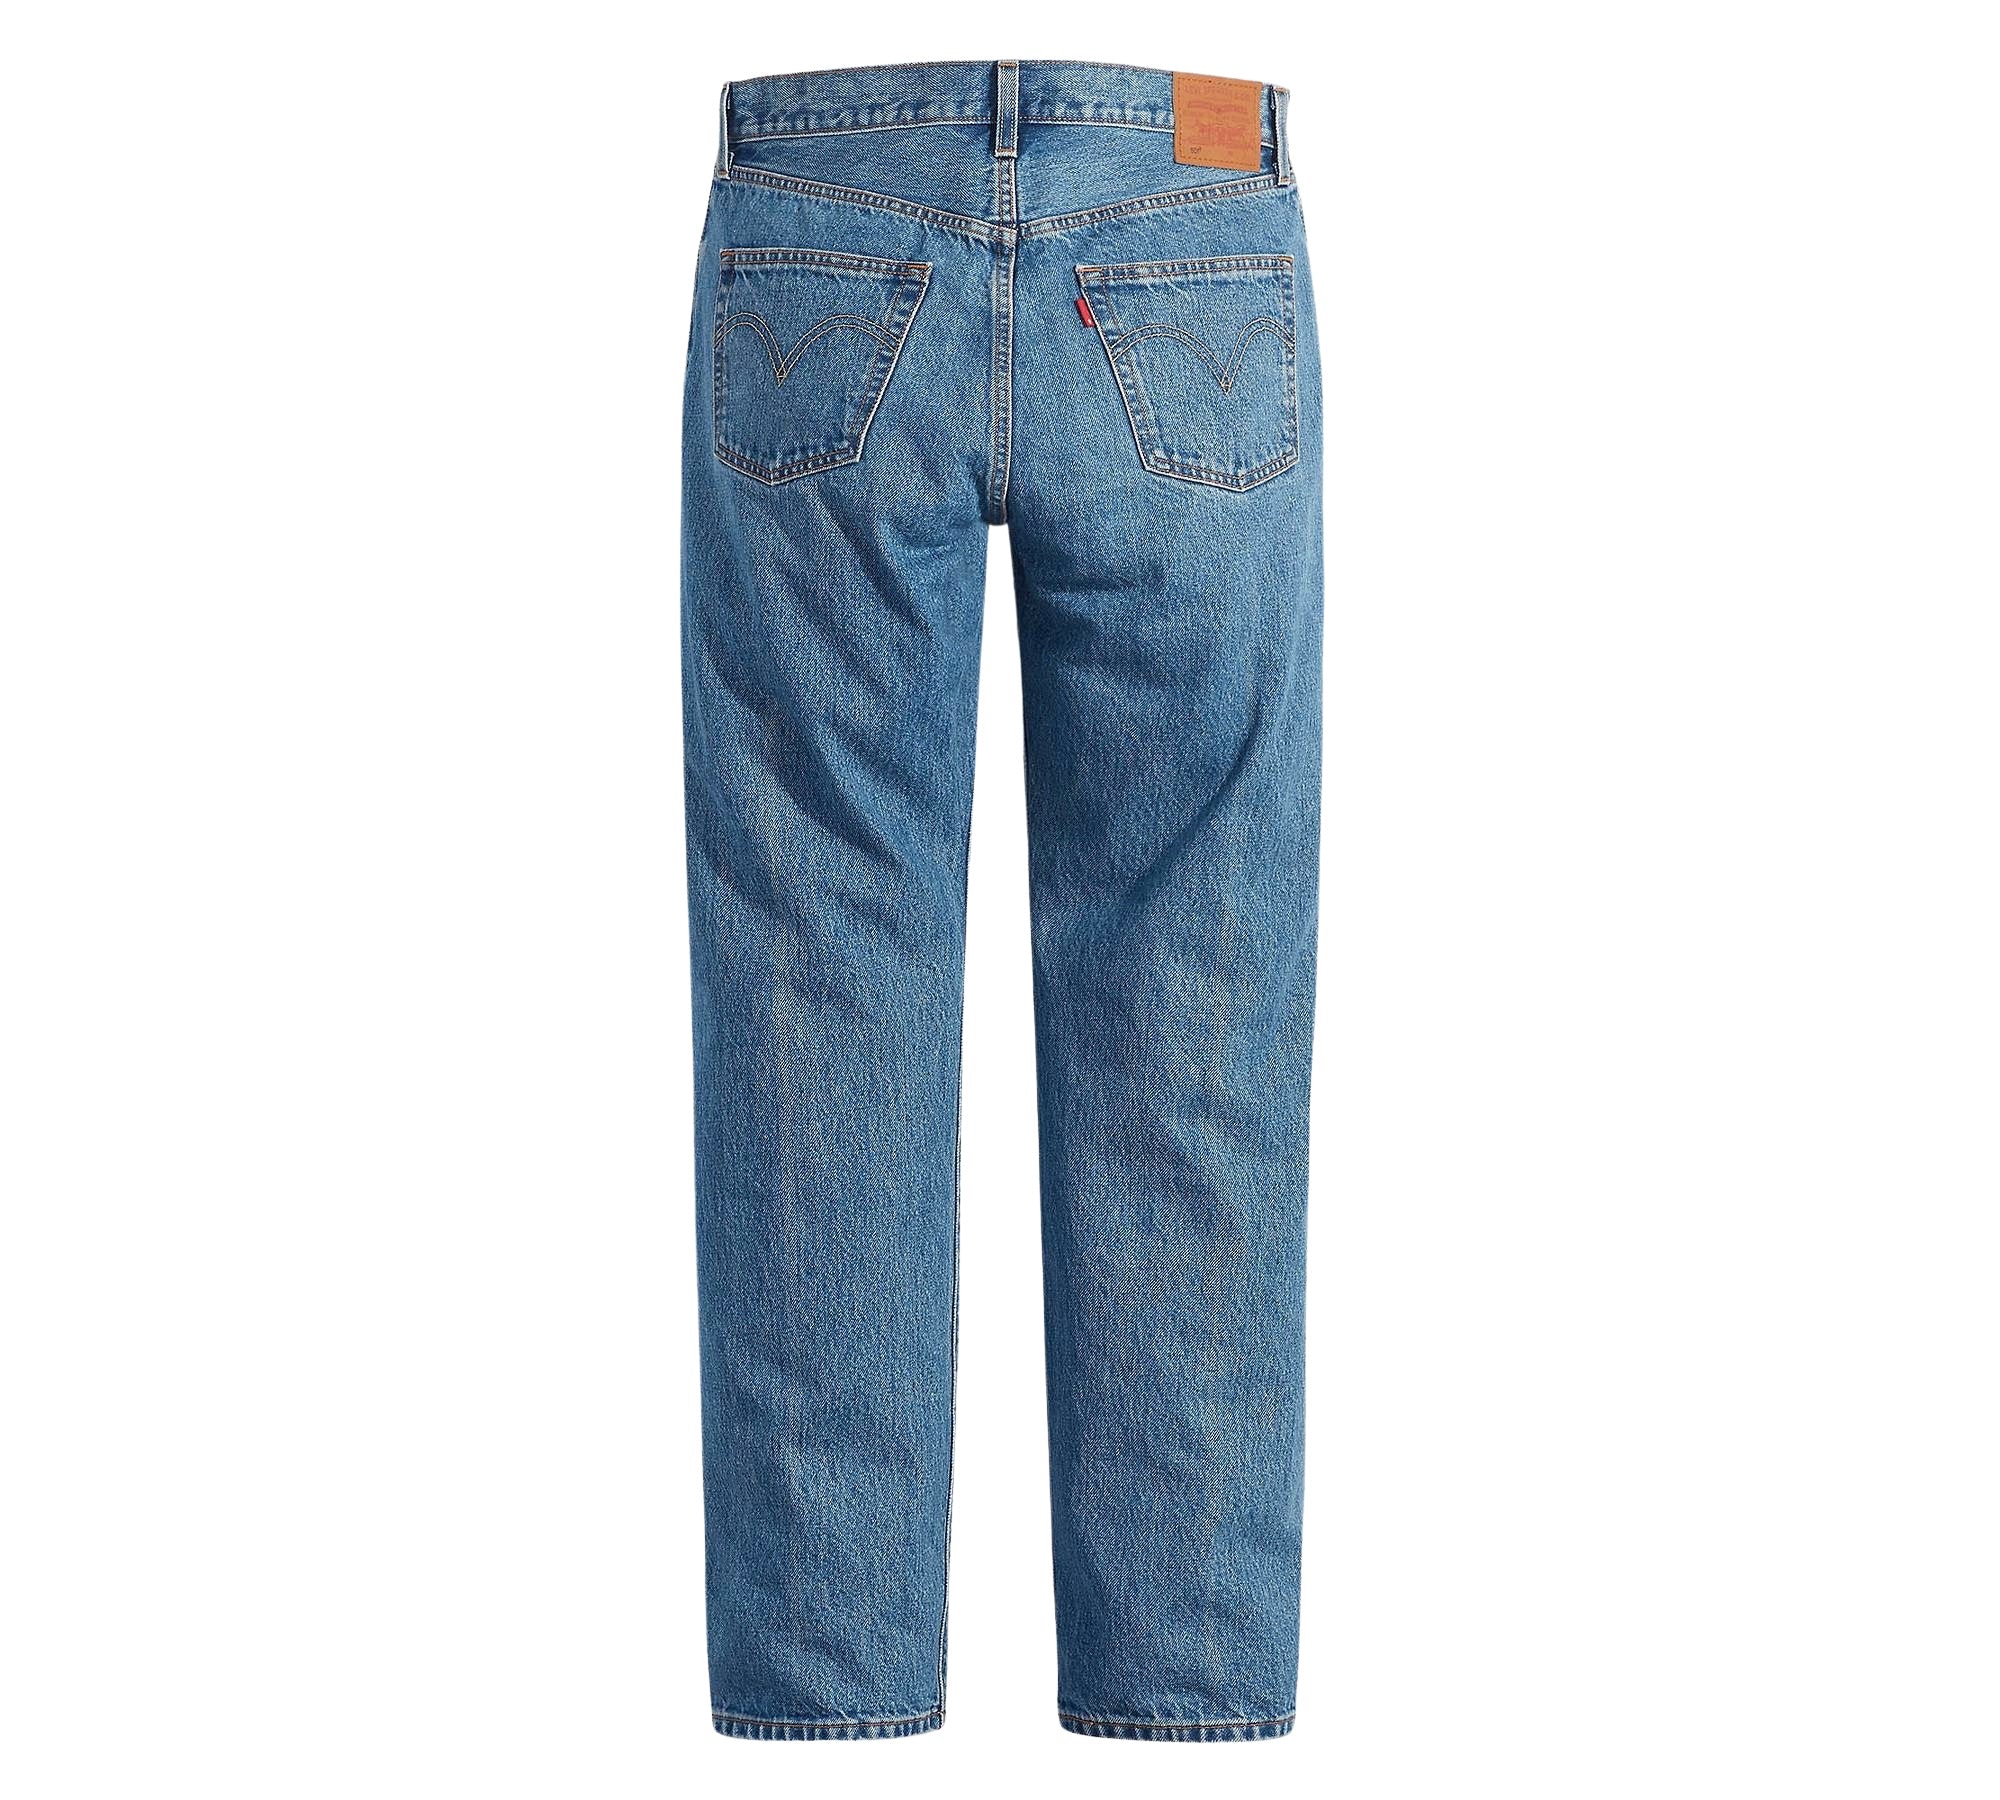 4 Pack - Vintage LEVI'S Classic Blue Zip Fly Jeans - Waist 31 - Length 32 - Vintage Superstore Online